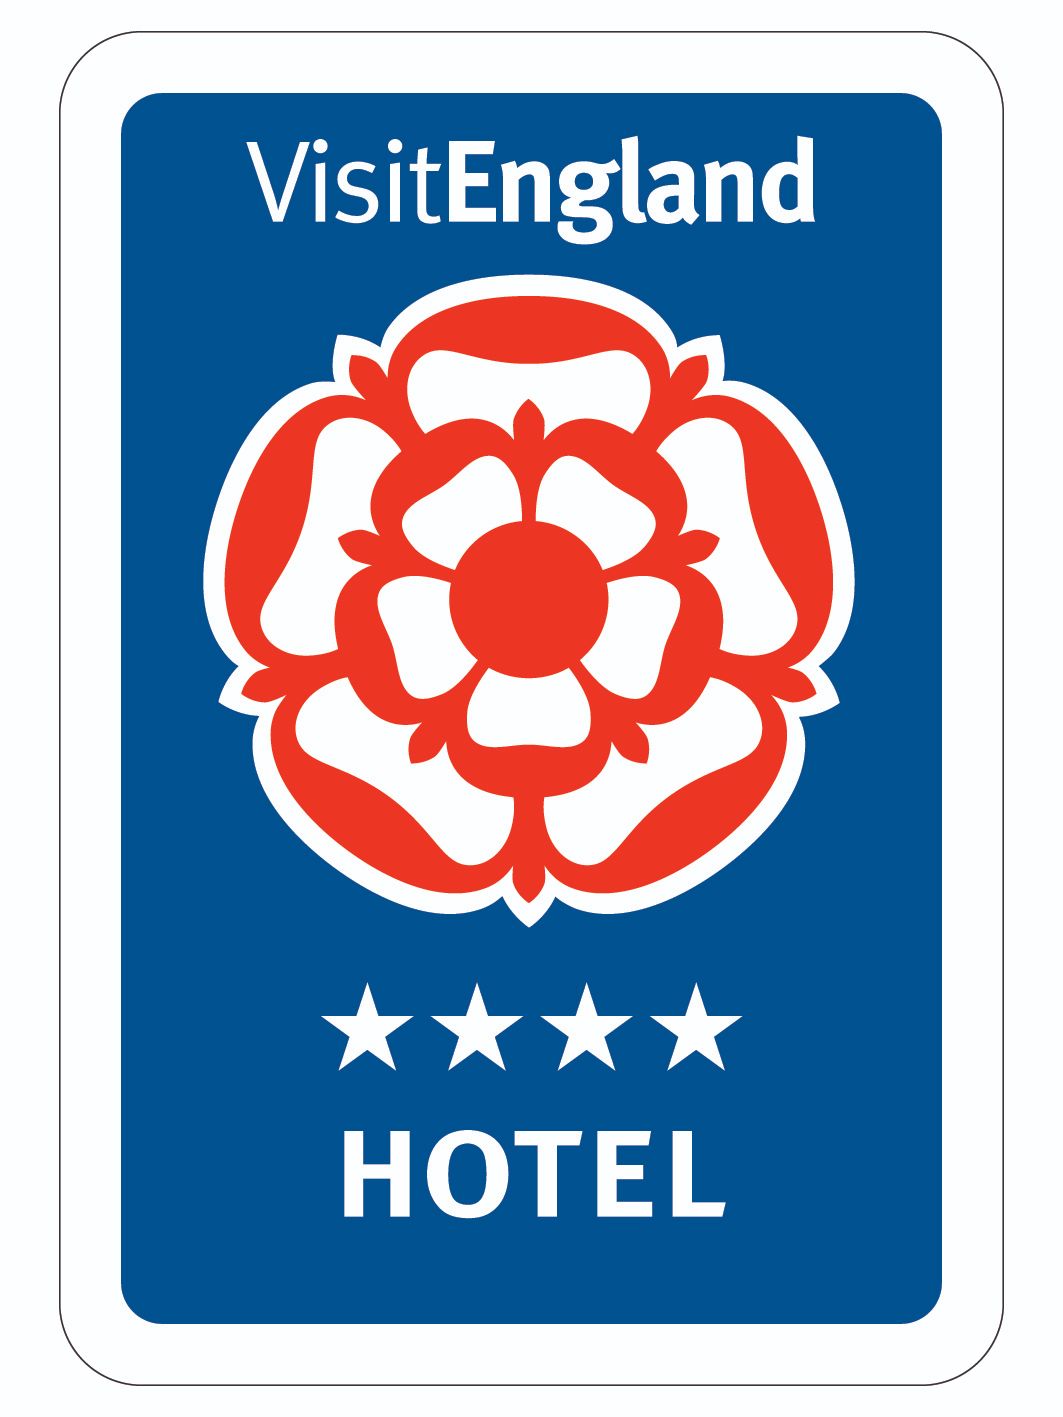 Visit England 4 star Hotel